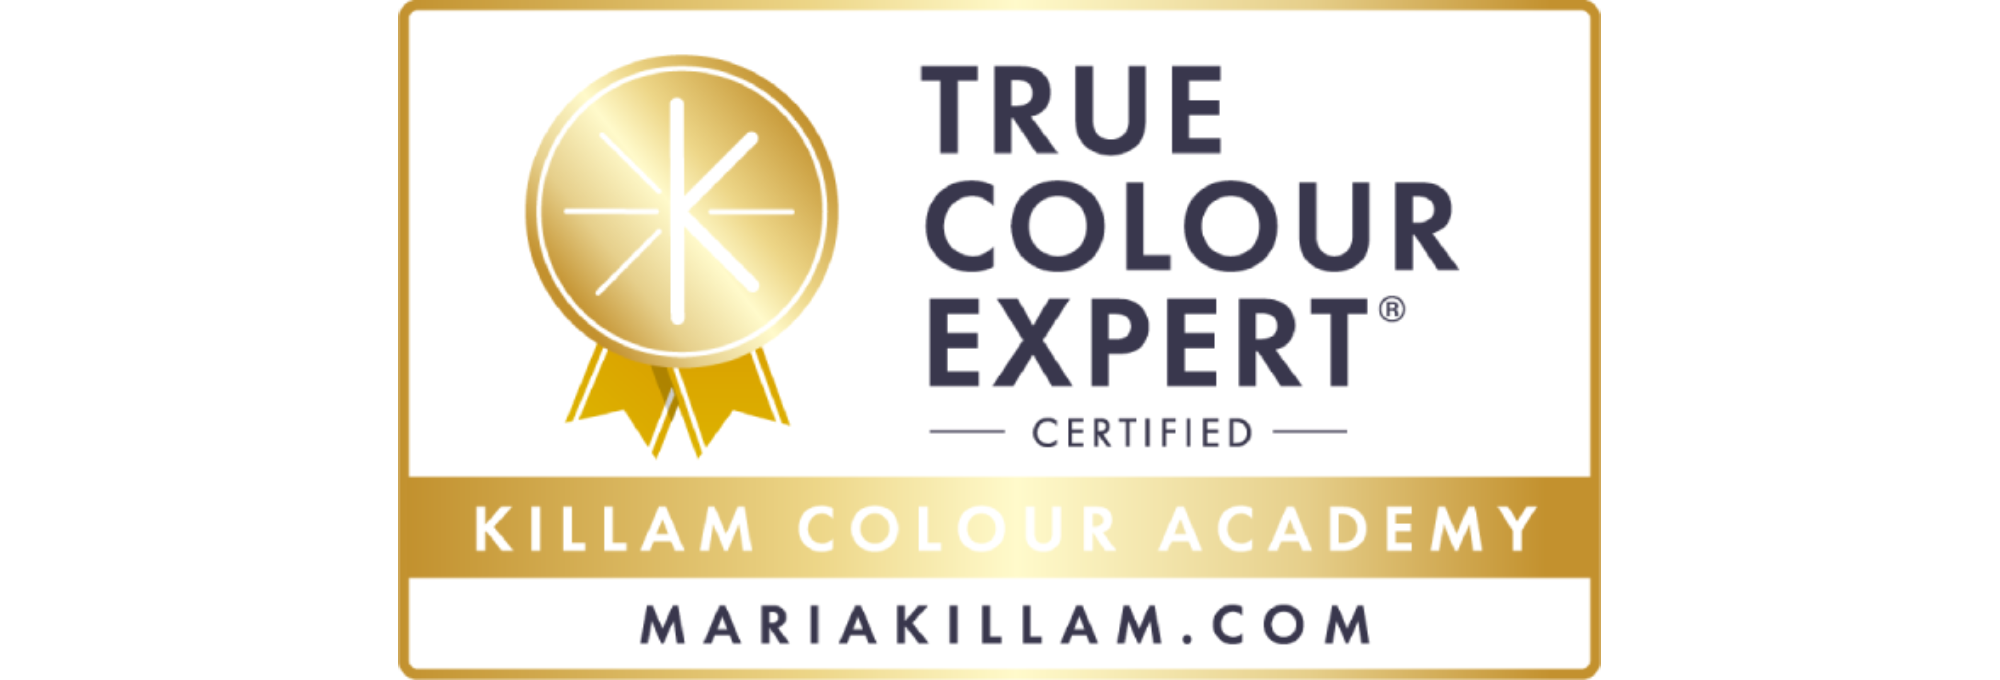 True-Colour-Expert-Certification-Signature-Services-MD